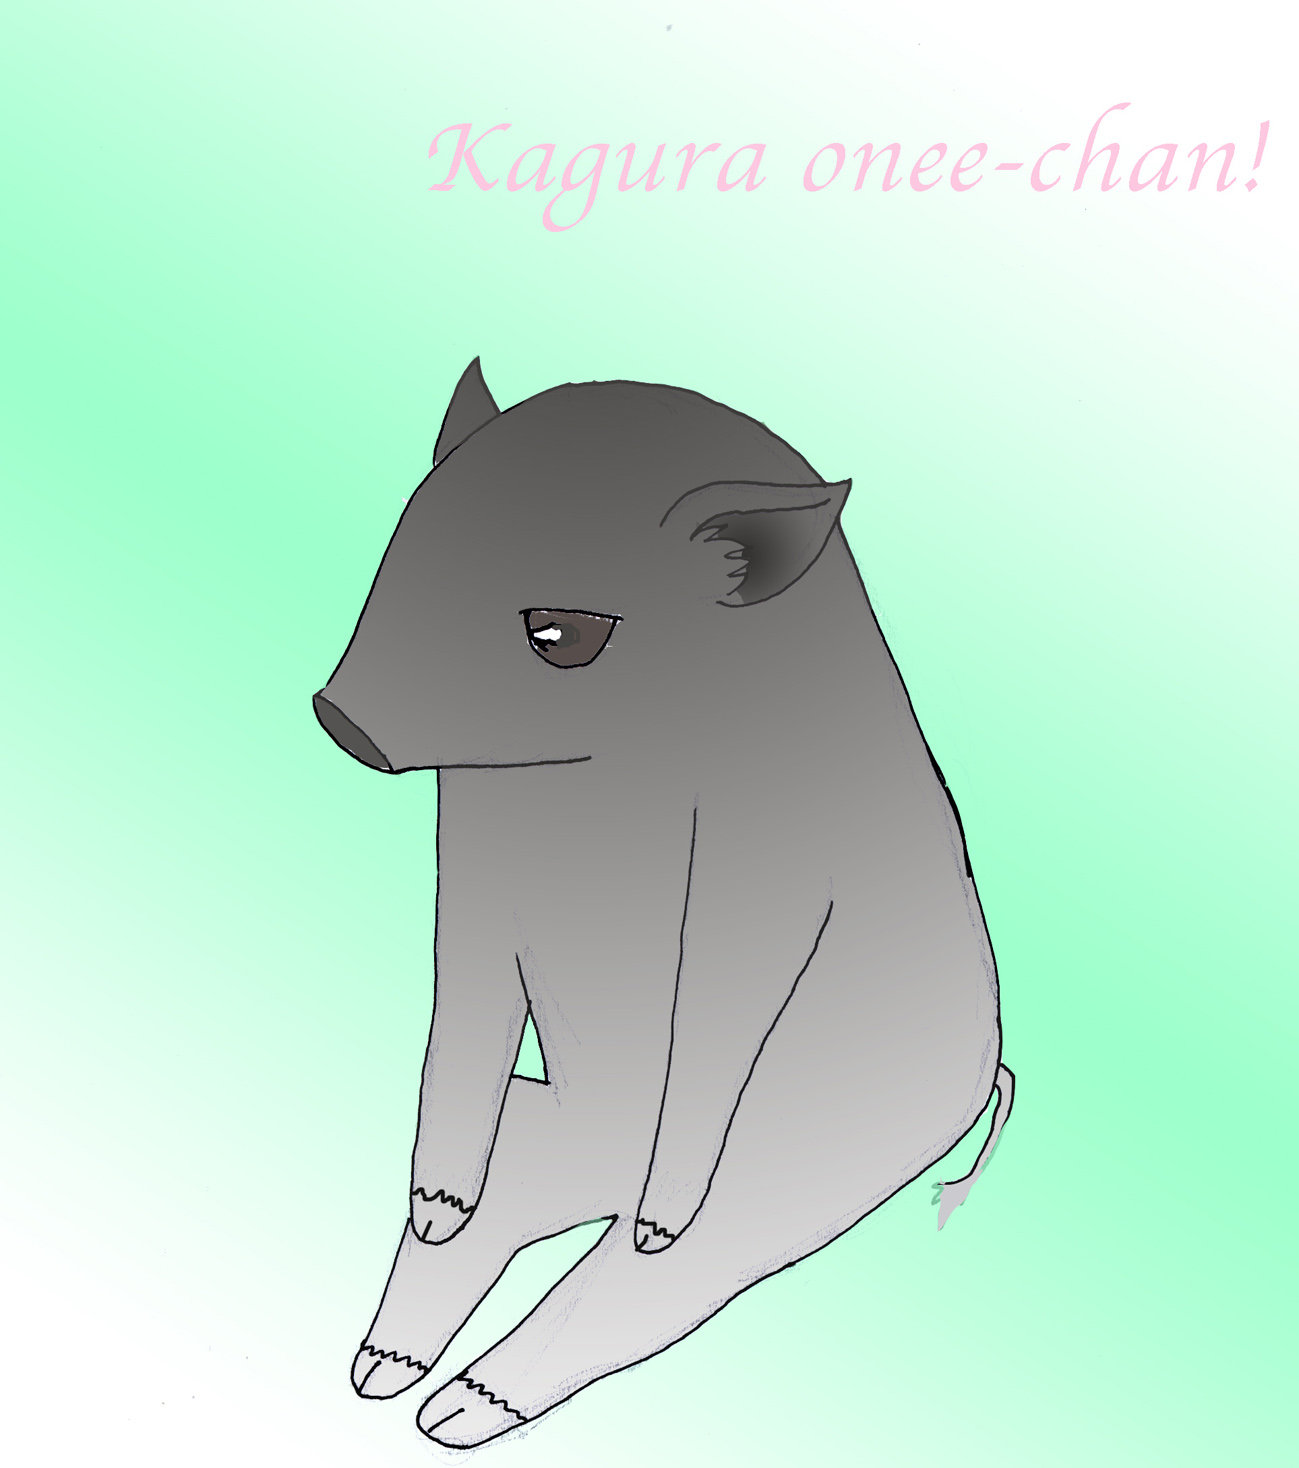 Kagura onee-chan! by SasukeAndMomijiHaHa